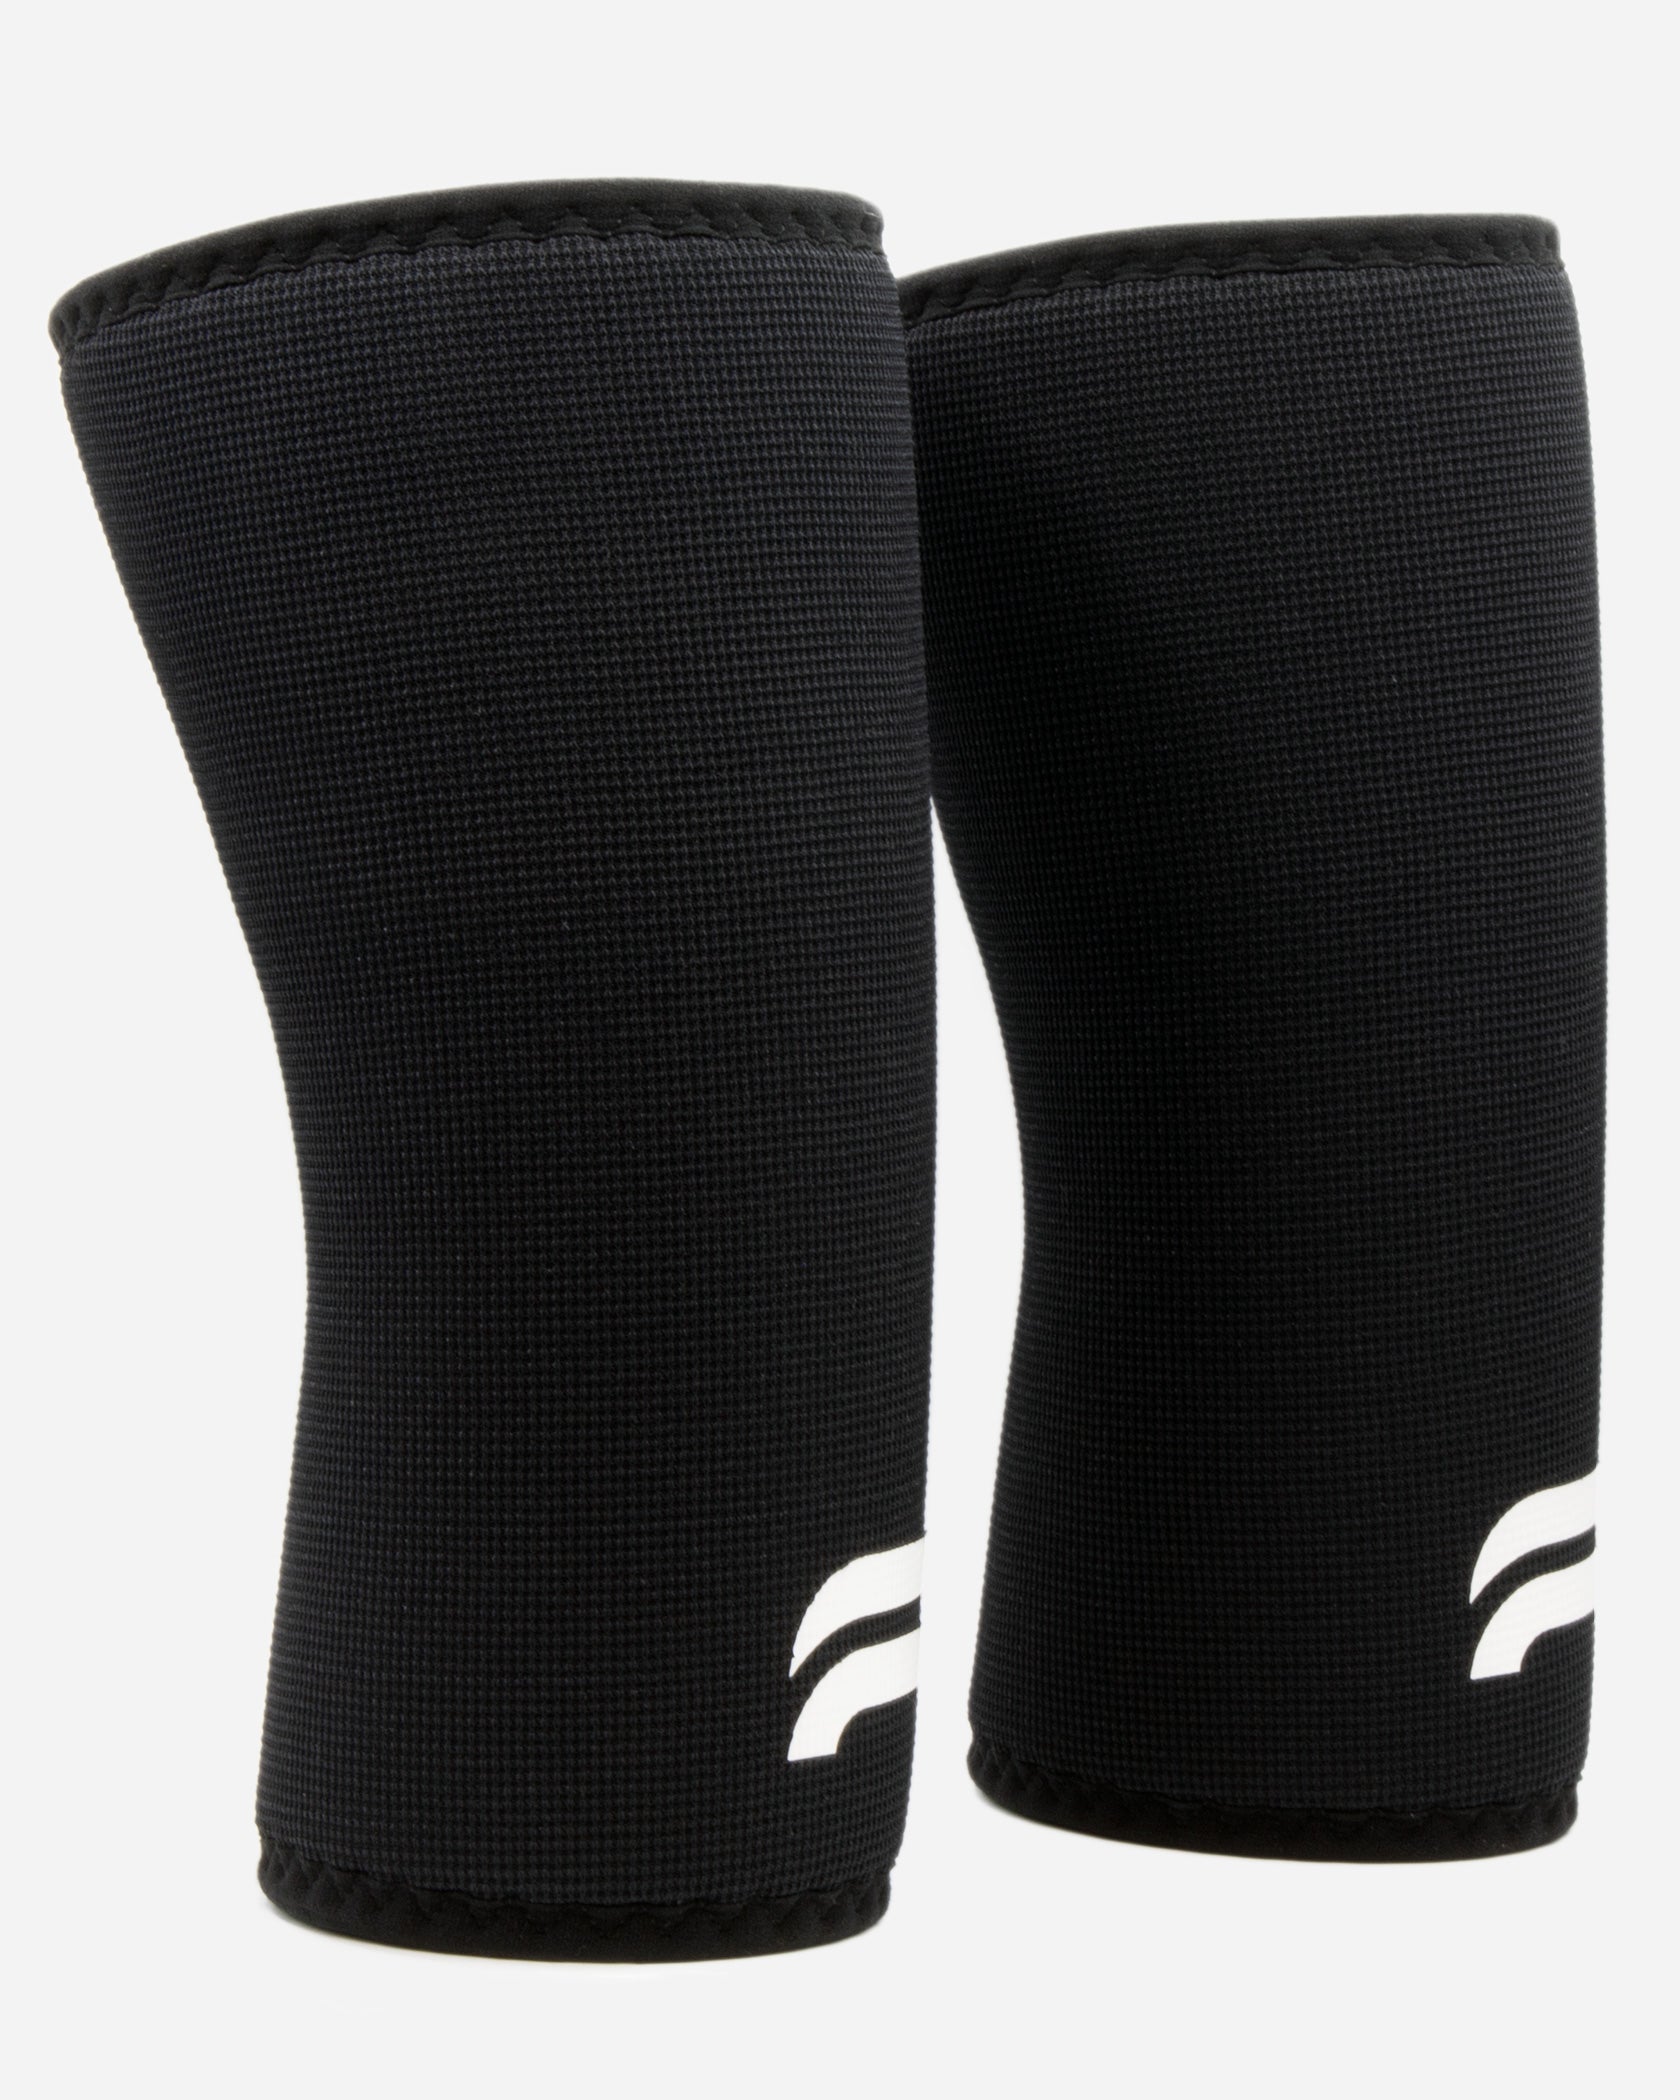 Fortex Knee Sleeves 7 mm - Regular - Black - IPF Approved - Fortex